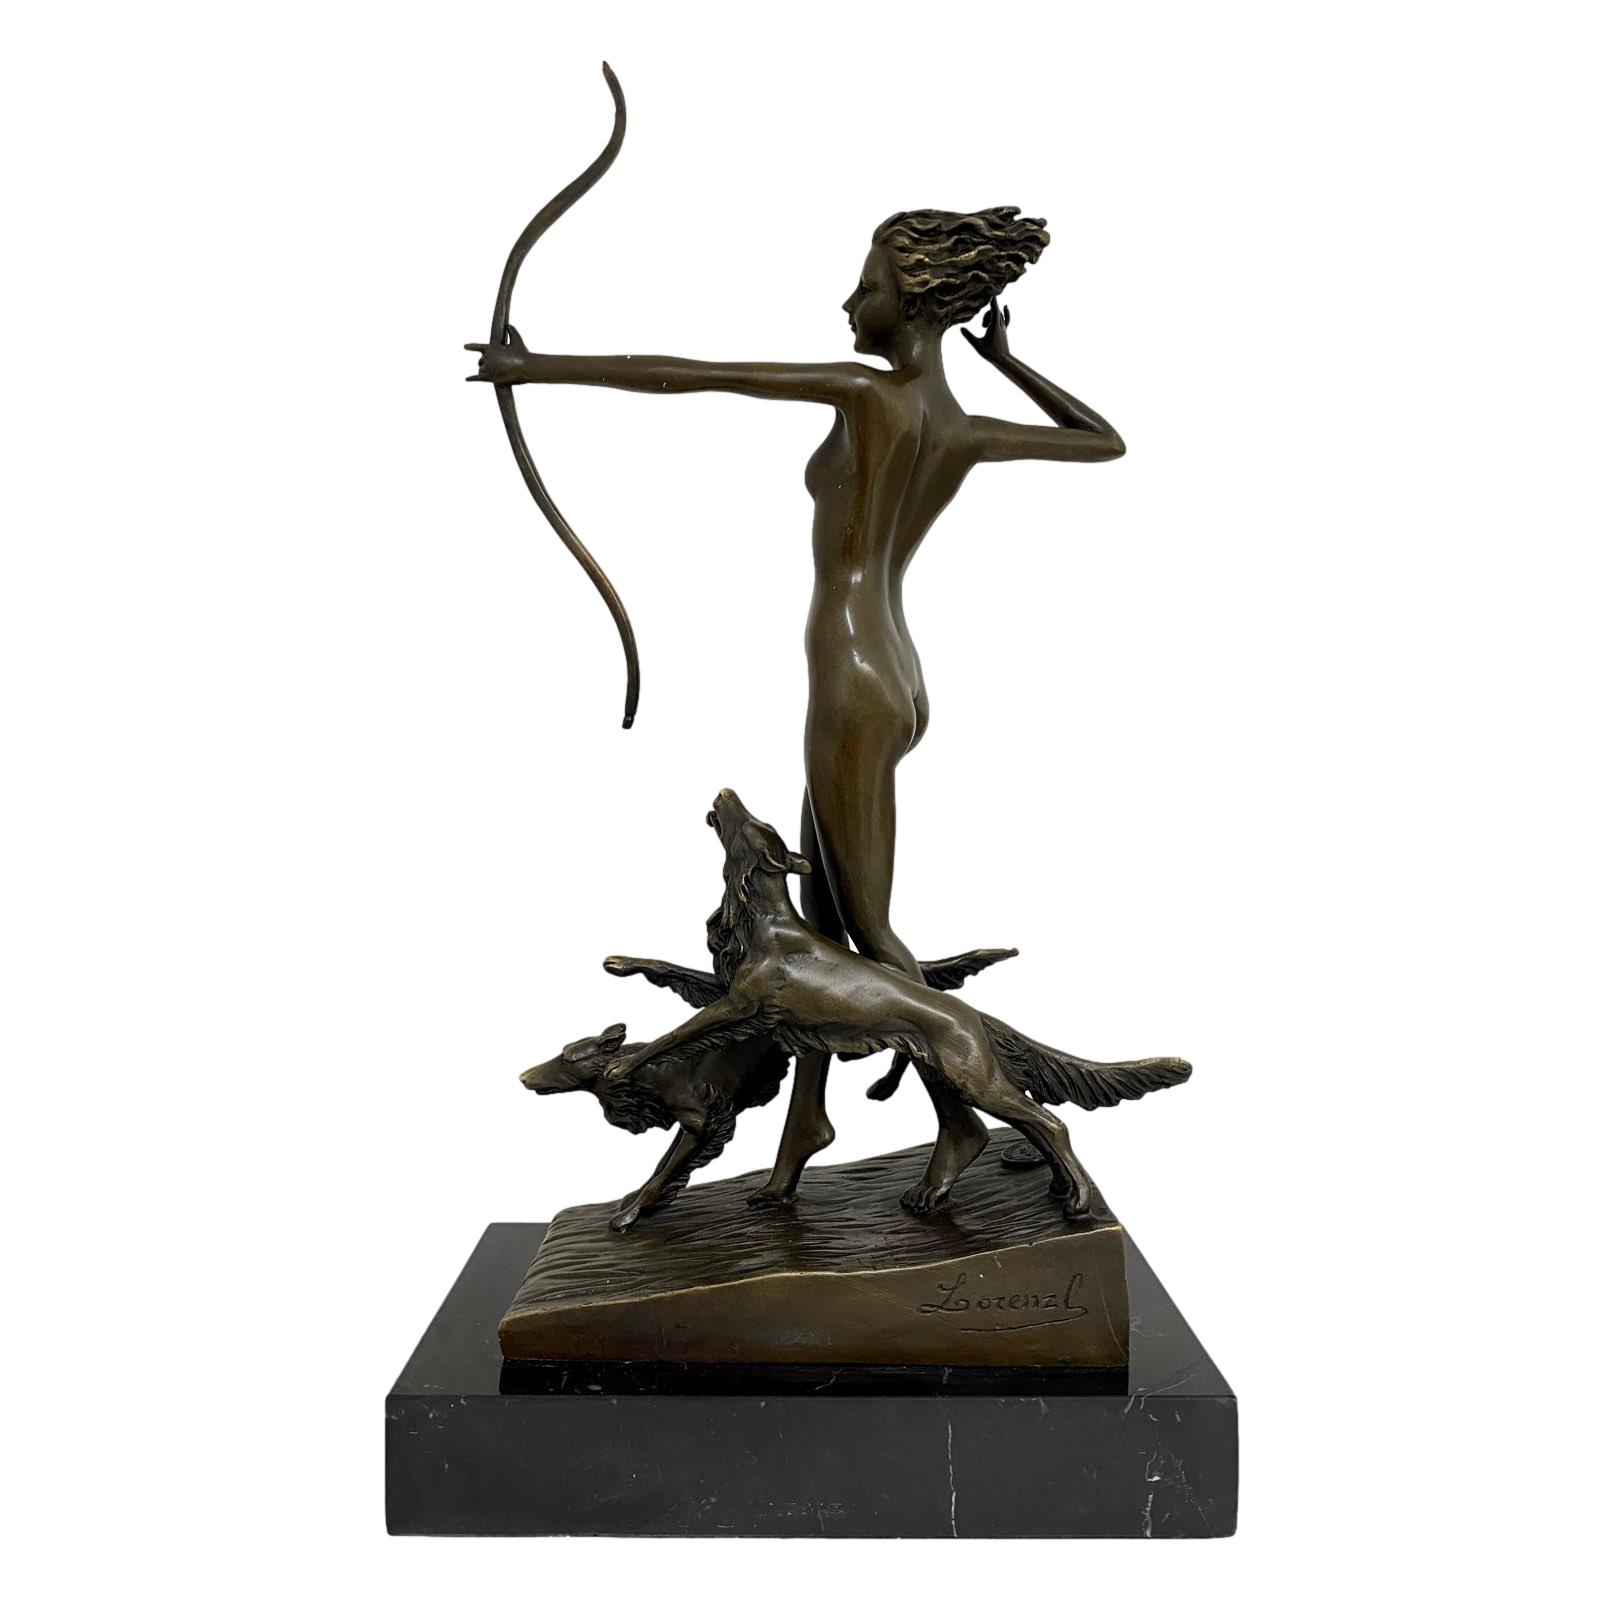 Bronzeskulptur Figur Göttin Diana Hund nach Lorenzl Antik-Stil Replik Kopie a 